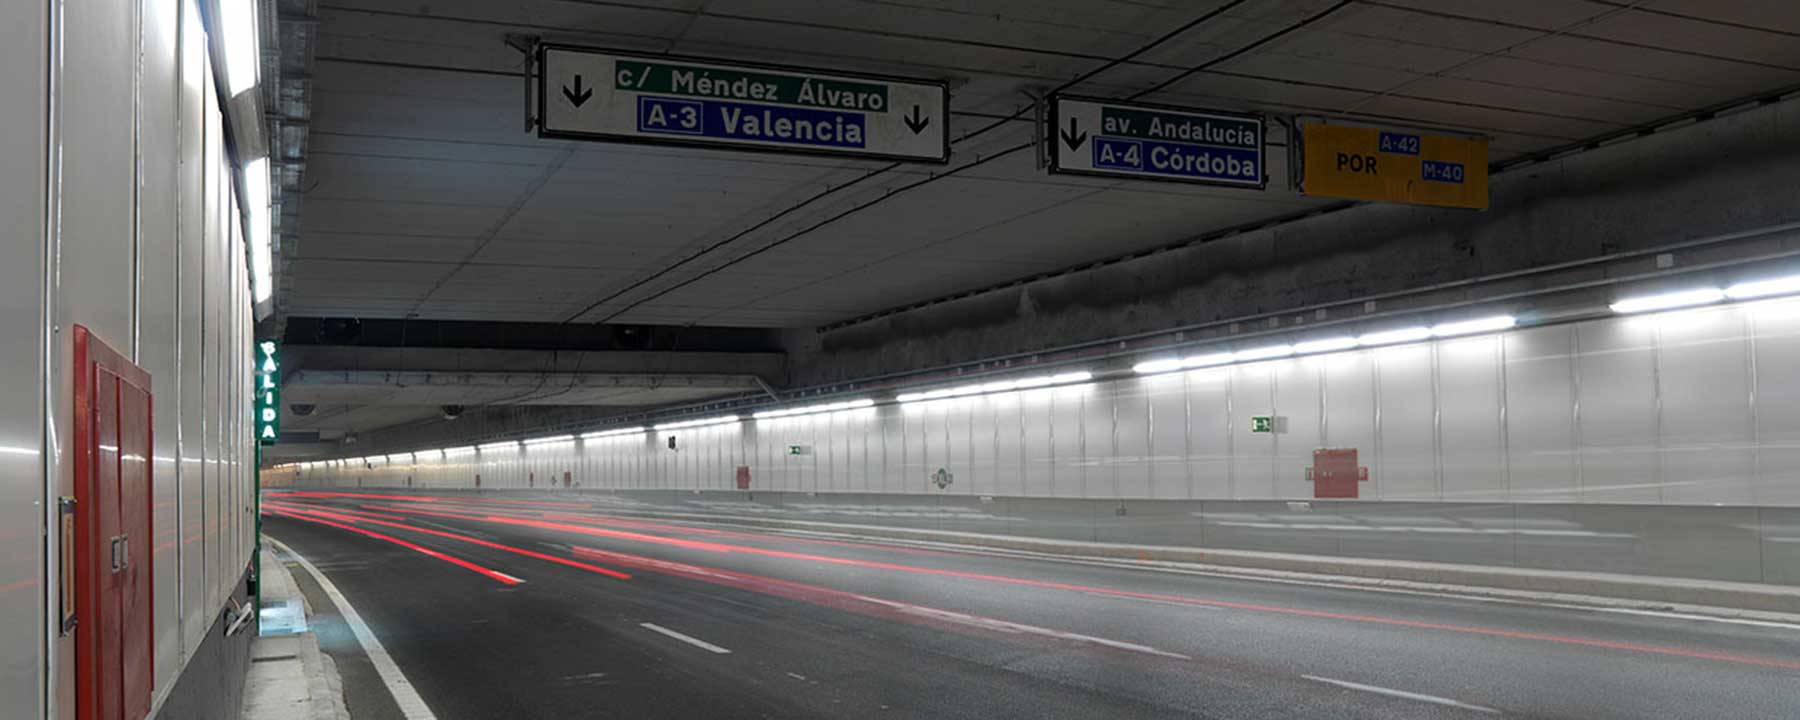 Tunnel lighting and underspasses